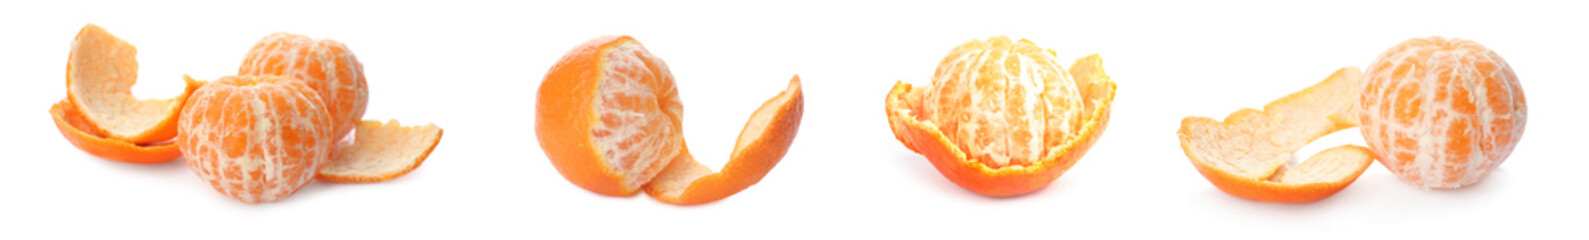 Set with tasty ripe tangerines on white background. Banner design